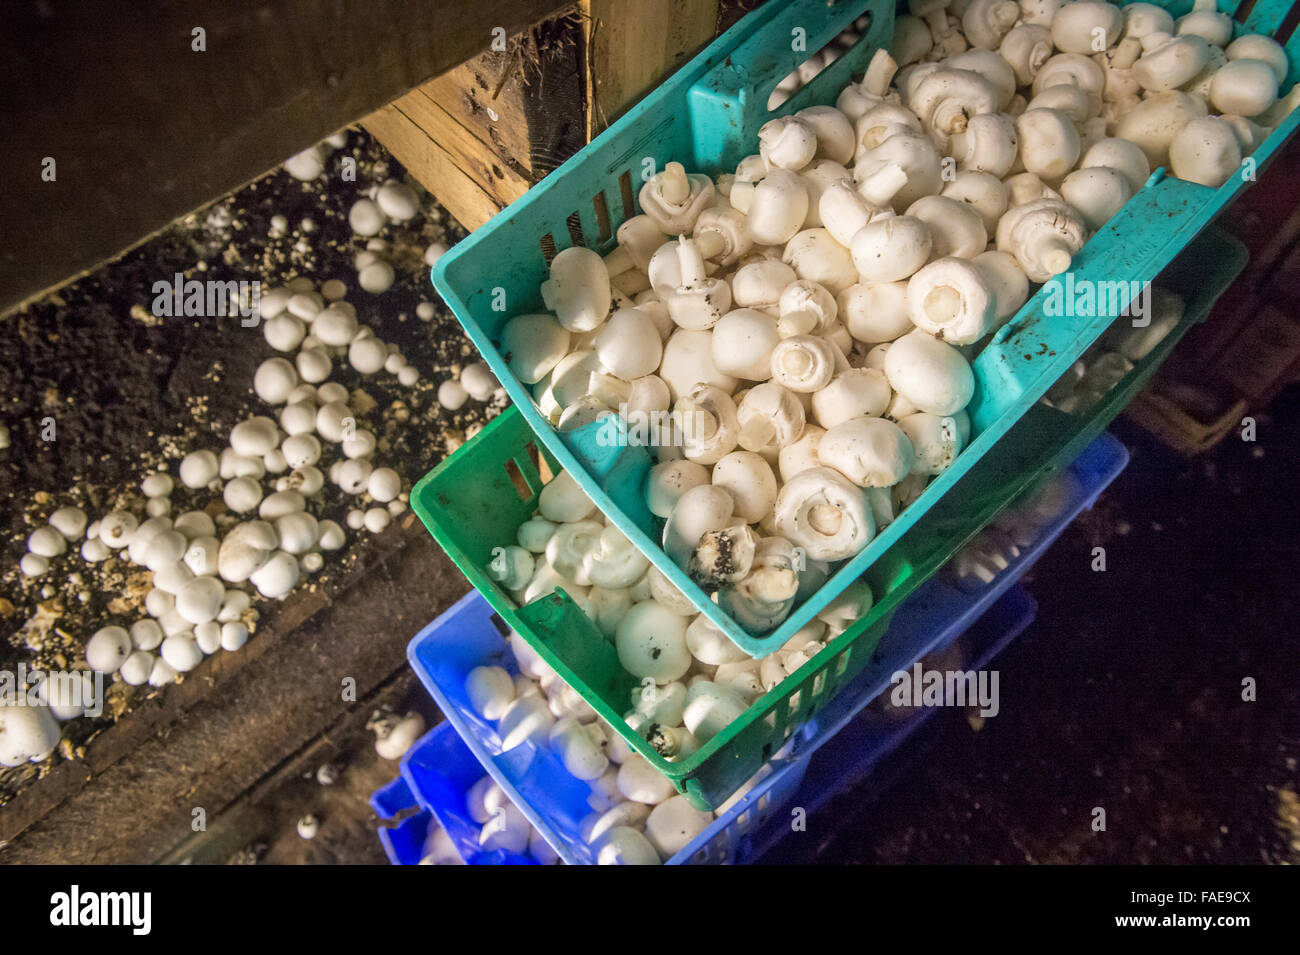 Inside look at a mushroom farm Stock Photo